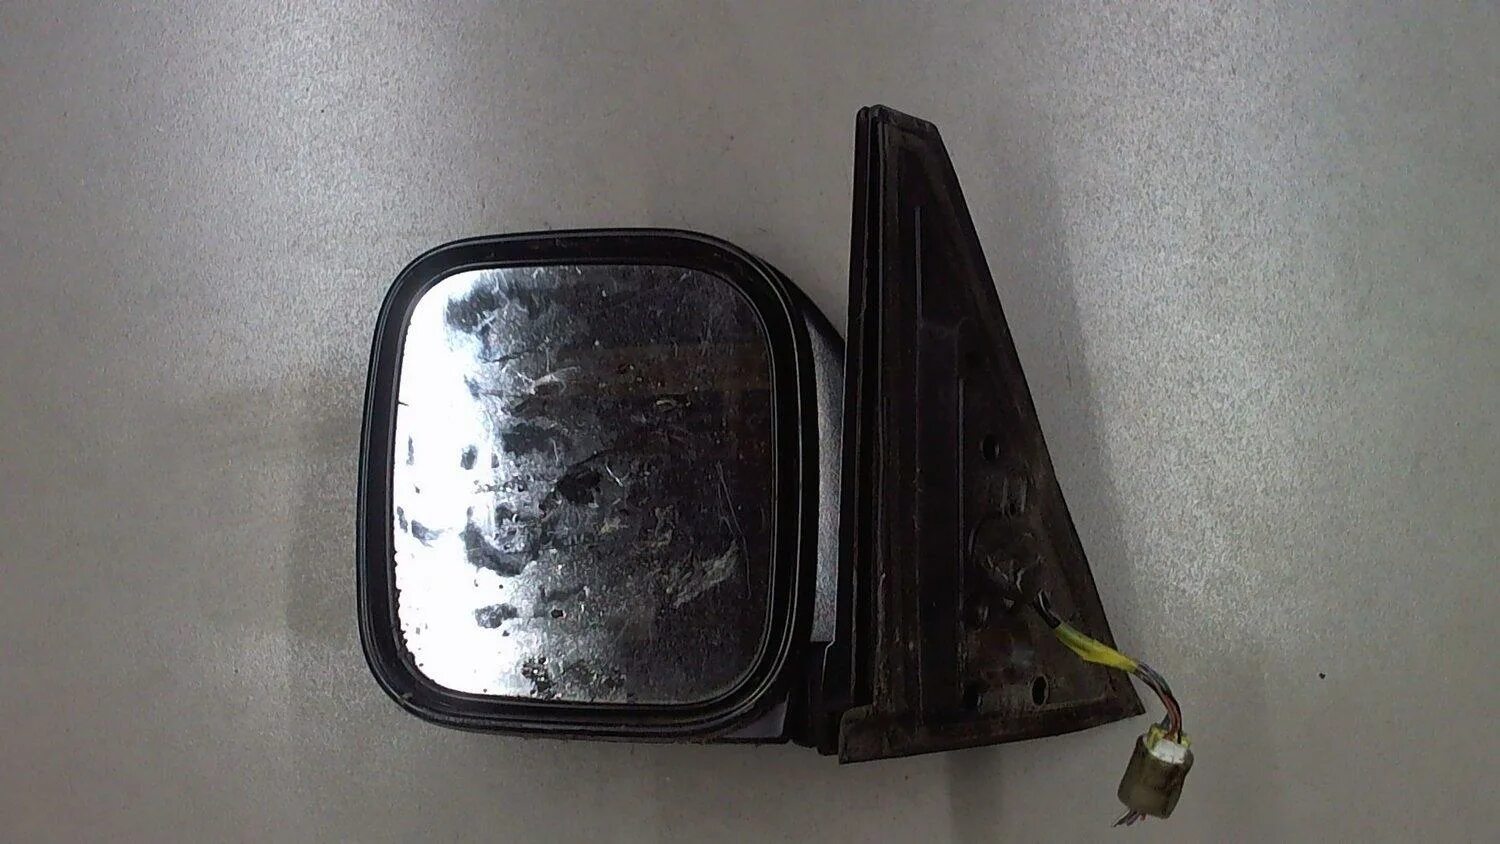 Зеркало паджеро купить. Зеркало боковое Mitsubishi Pajero 1988. Зеркало Паджеро 2. Зеркало боковое Mitsubishi Pajero 1988 года. Mitsubishi Pajero II зеркальный элемент.